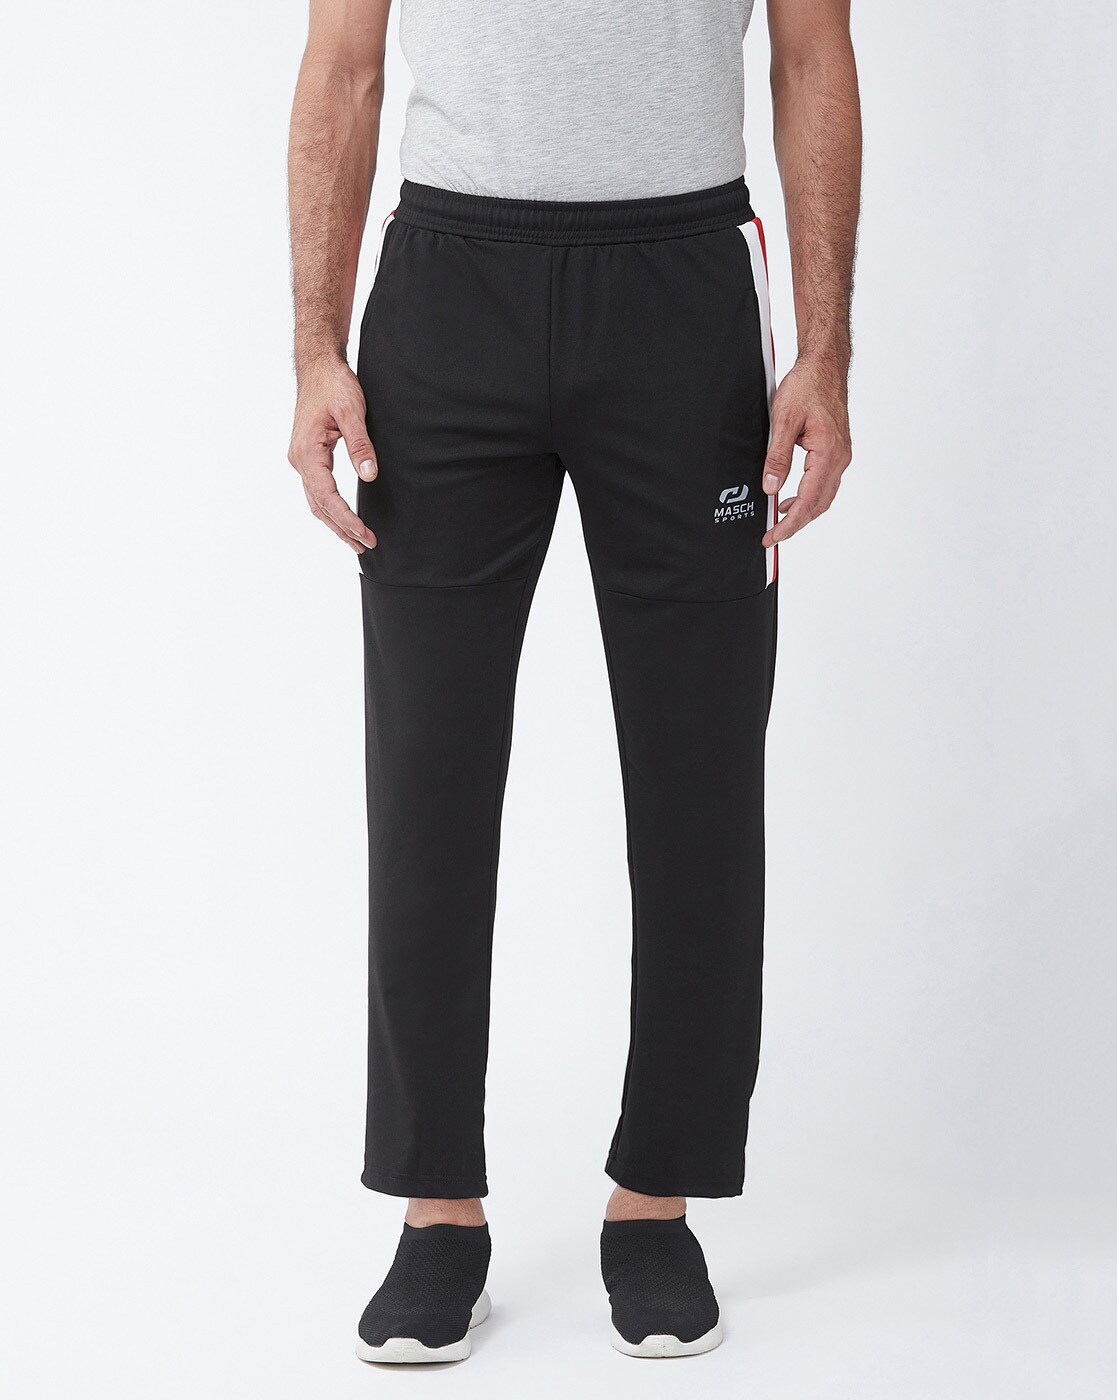 Buy Black Track Pants for Men by Masch Sports Online